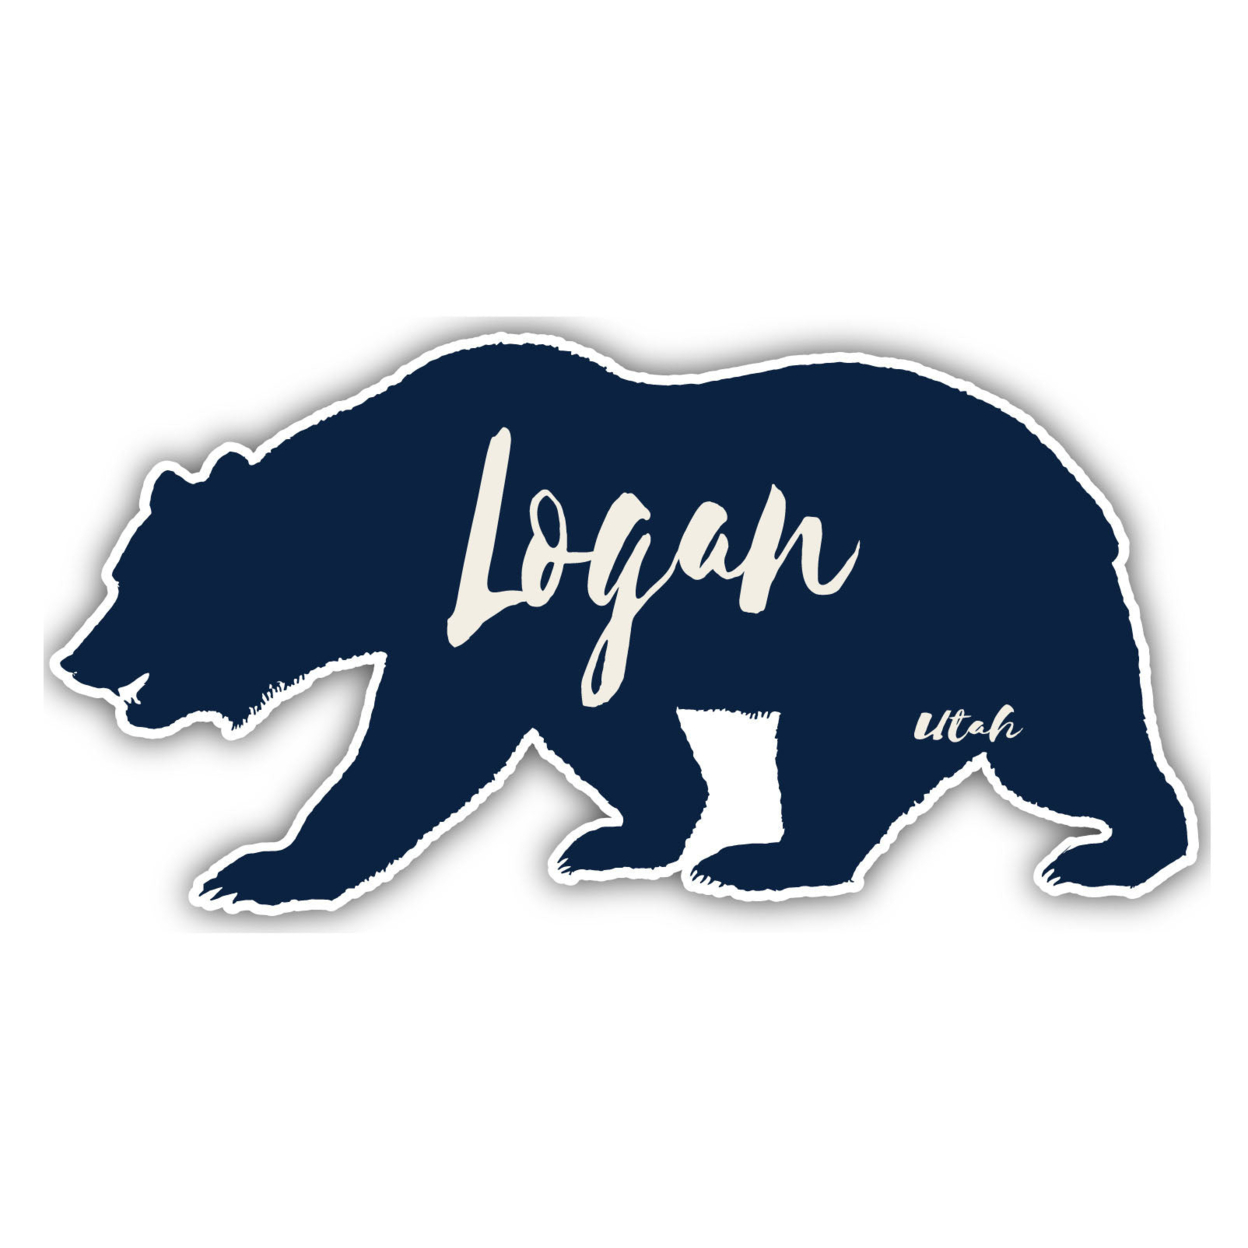 Logan Utah Souvenir Decorative Stickers (Choose Theme And Size) - 2-Inch, Tent